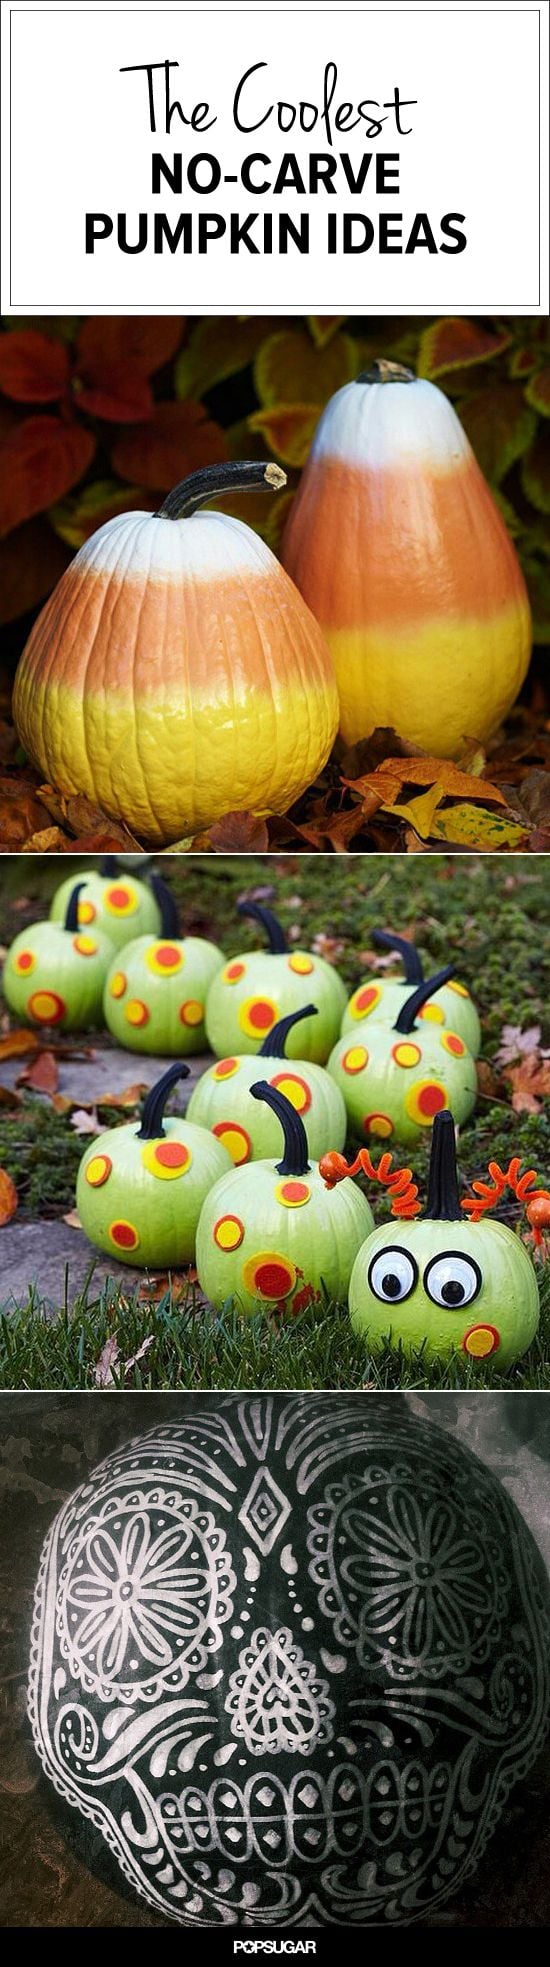 20 No-Carve Pumpkin Ideas